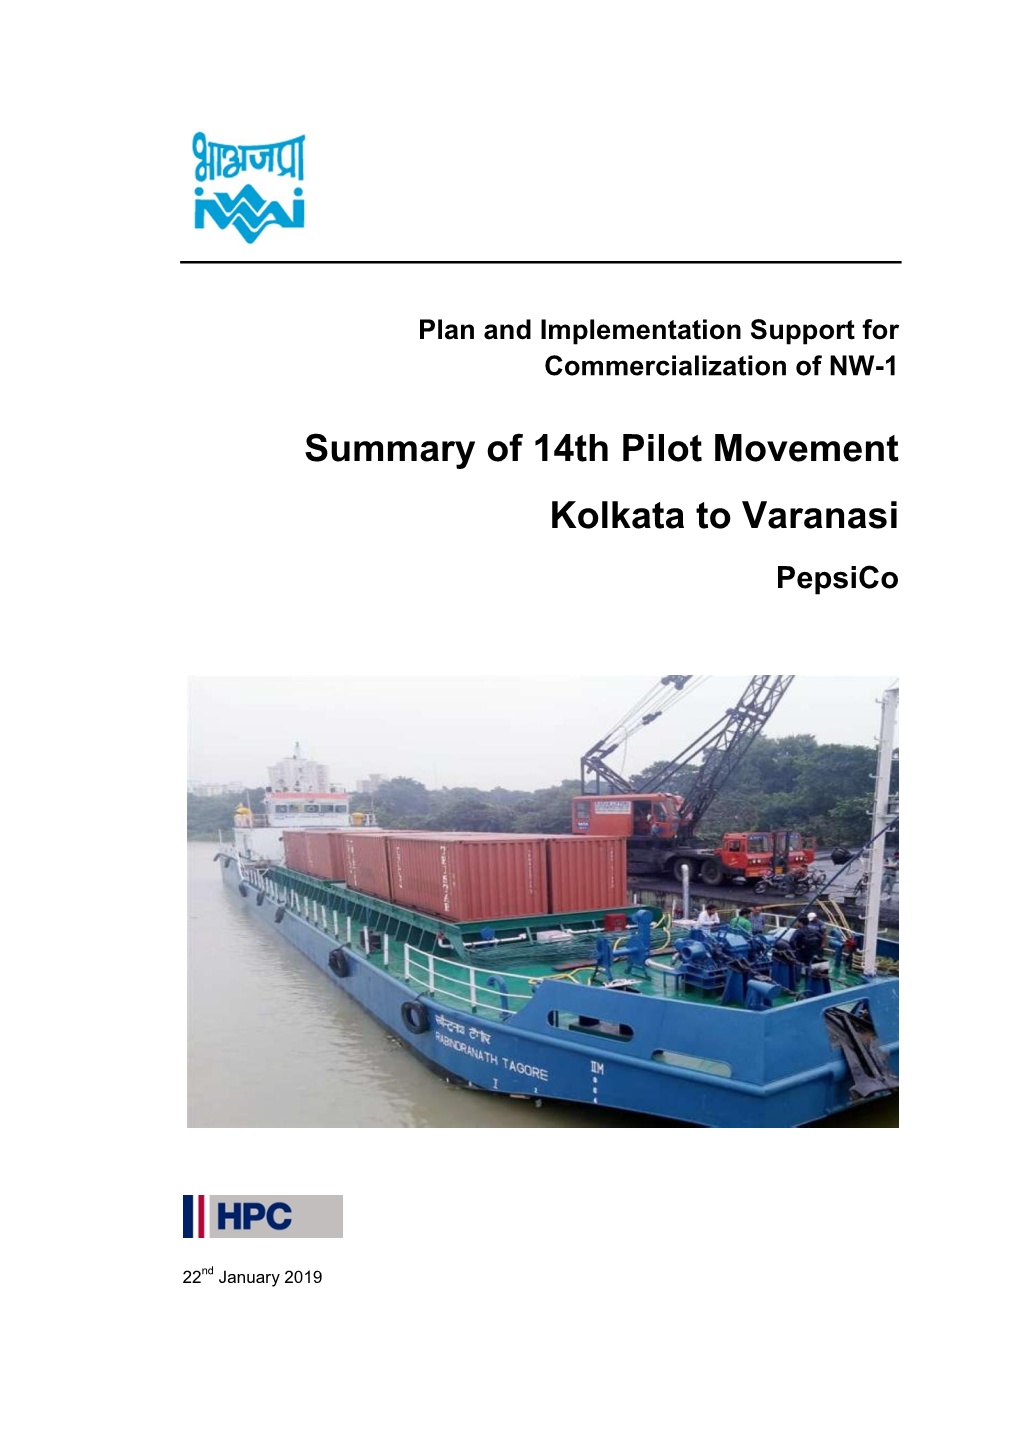 Summary of 14Th Pilot Movement Kolkata to Varanasi Pepsico